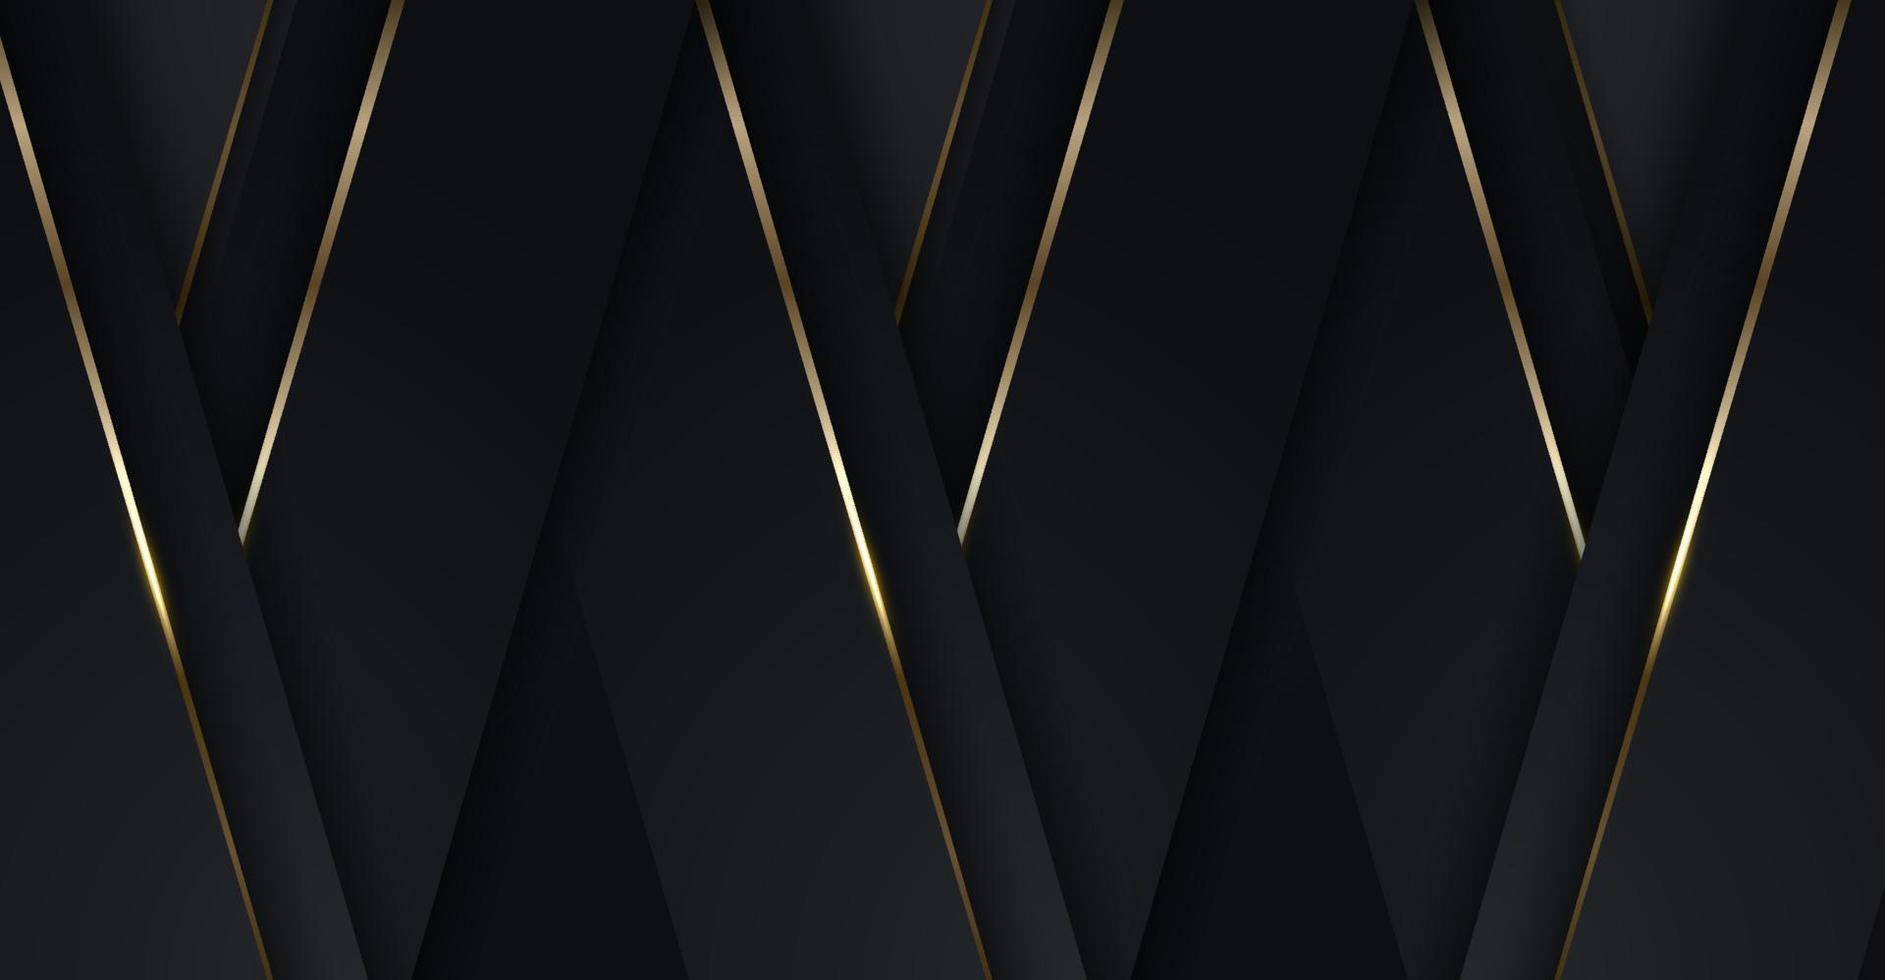 3D modern luxury banner template design black diagonal stripes pattern with golden lines light sparking on dark background vector